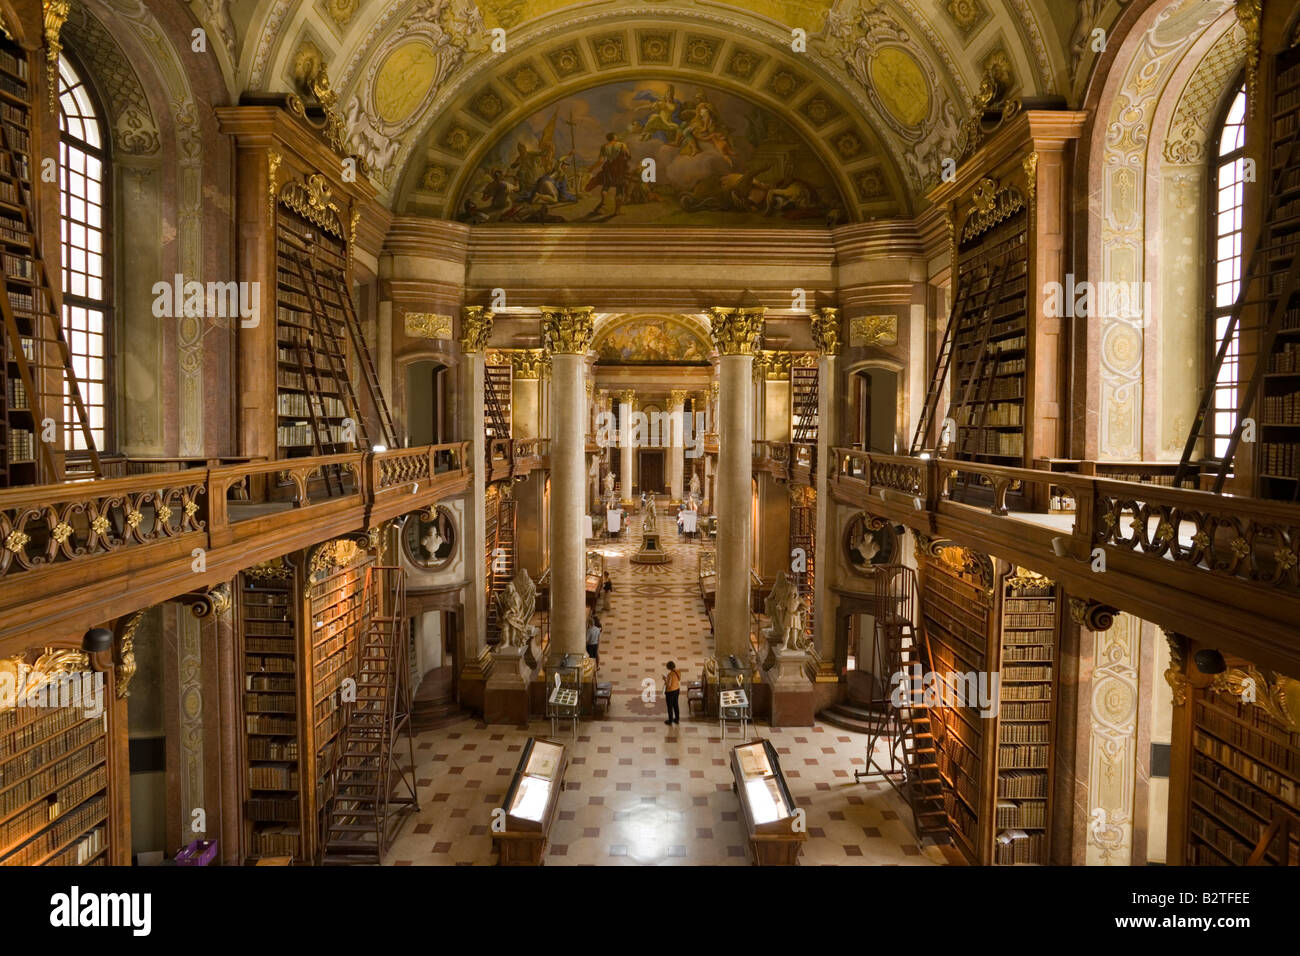 The interior of the Austrian National Library's splendor hall, Vienna, Austria Stock Photo